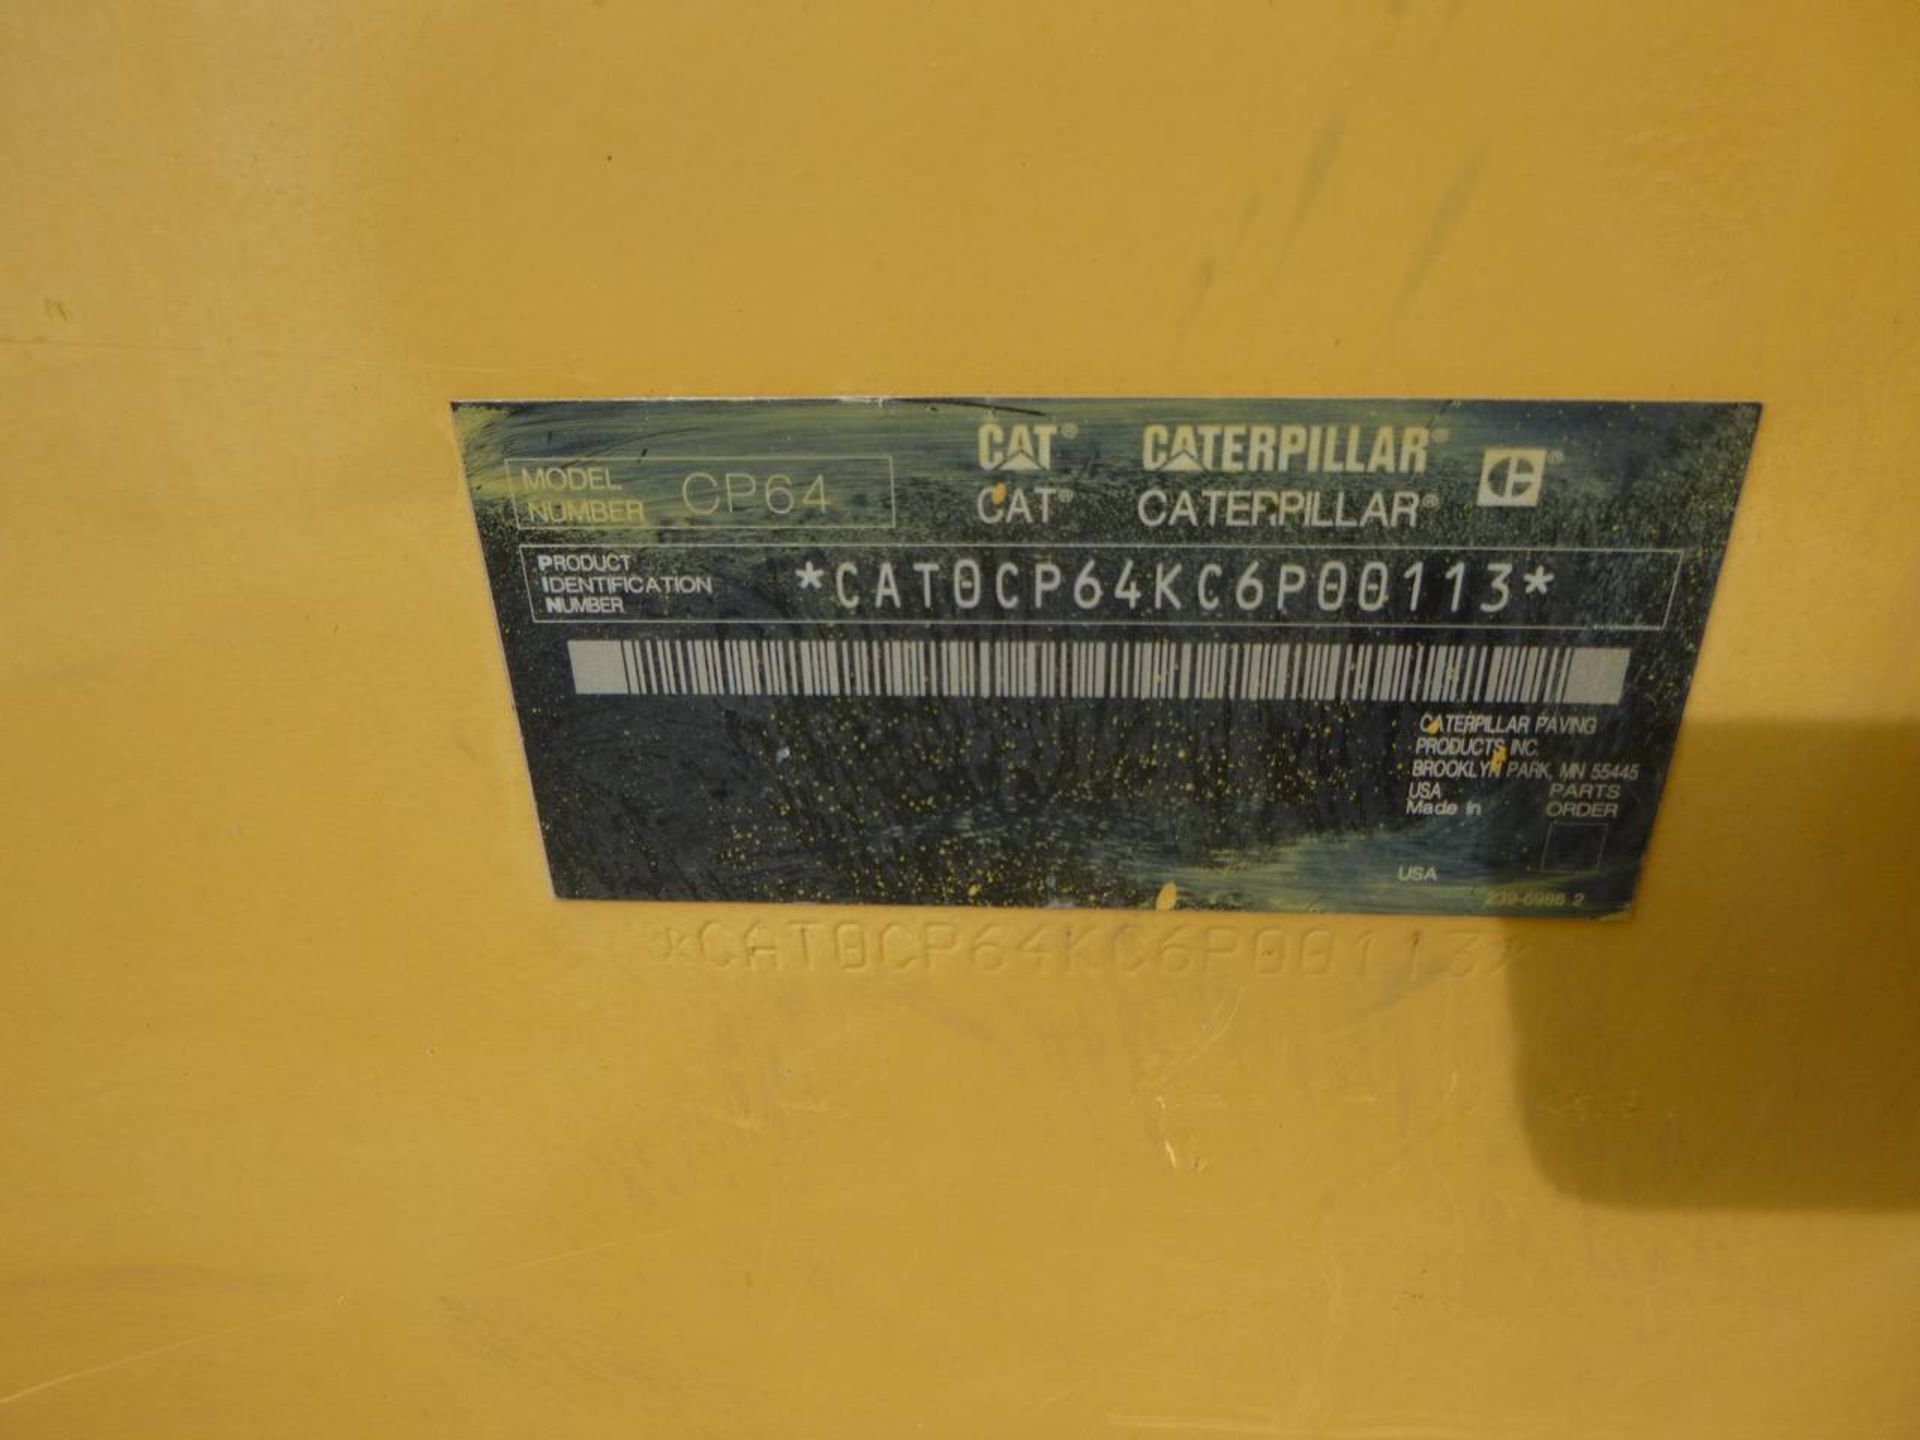 2009 Caterpillar CP64 Compactor - Image 9 of 9